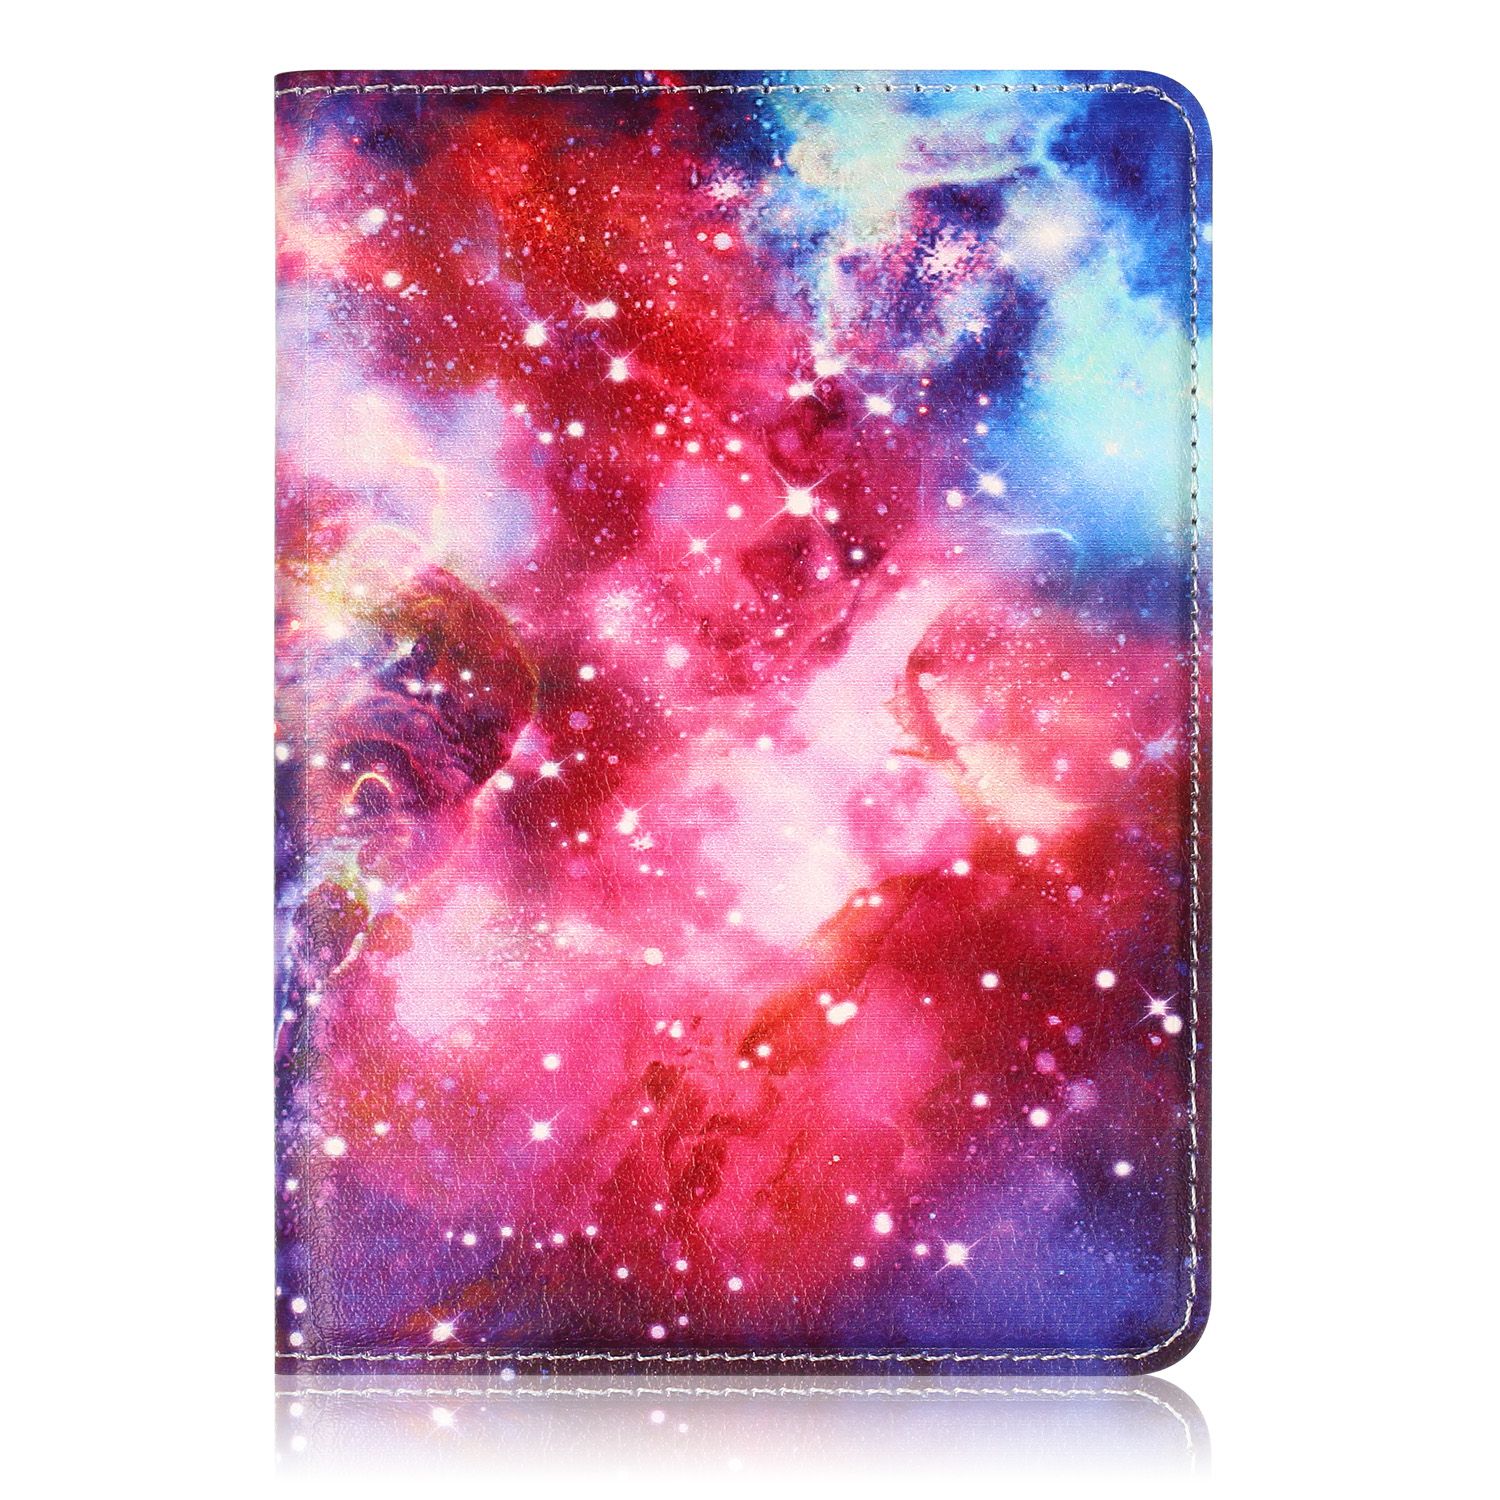 Printing-Passport-Tablet-Case---Milky-Way-1591491